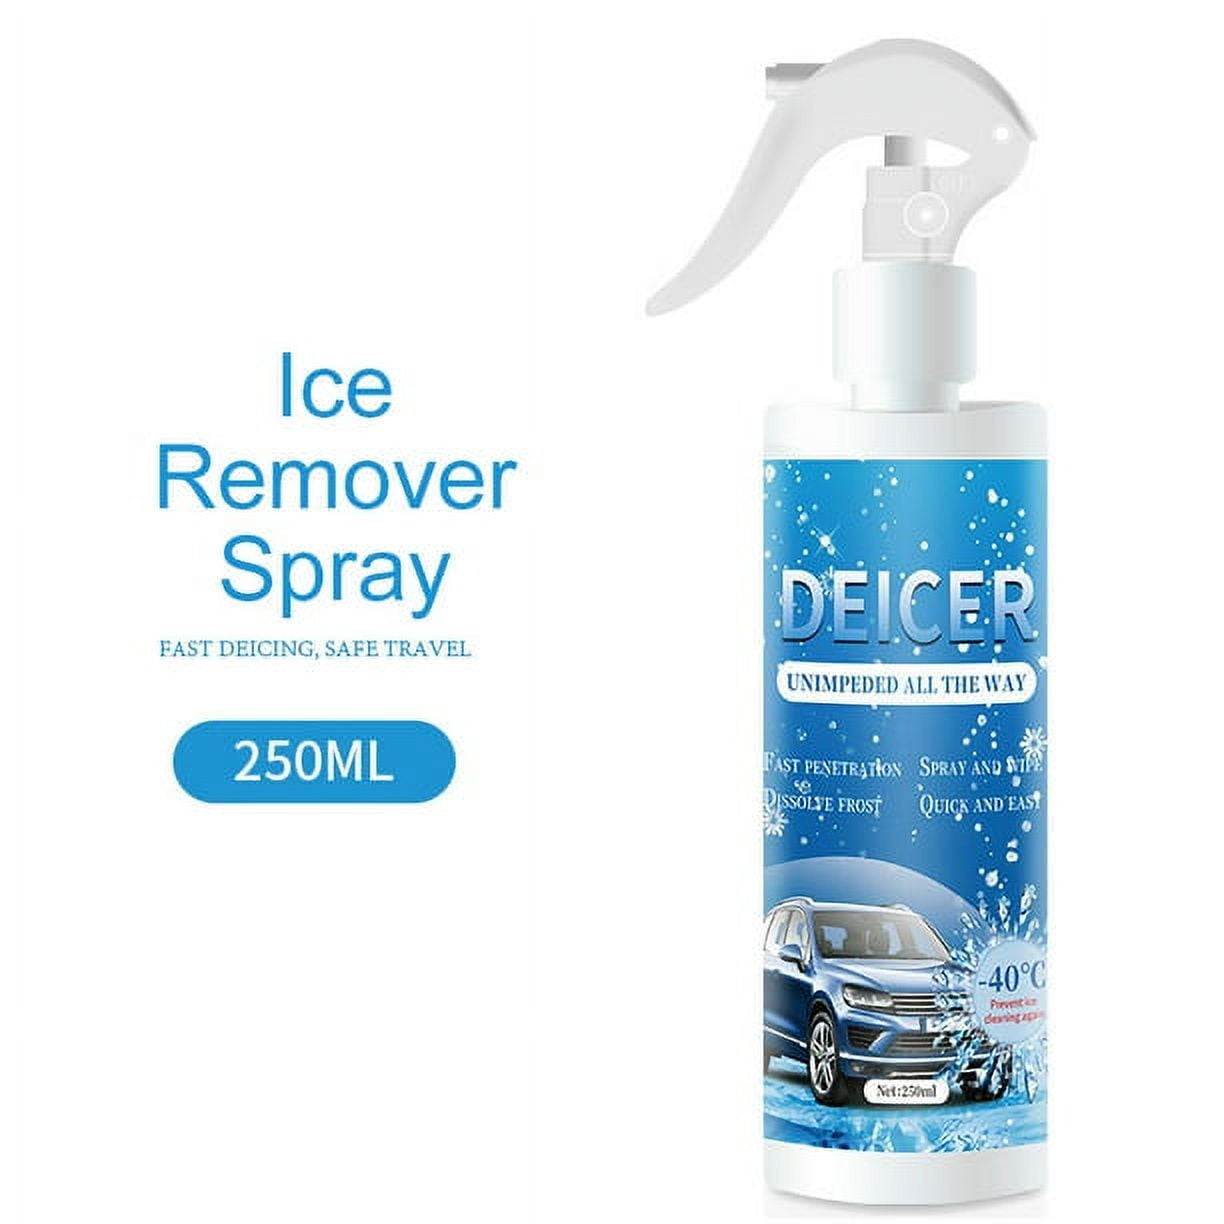 De Icer for Car Windshield Defrosting DeIcer Spray, De-icer Defrost Snow  Melting Spray Deicing Agent, Winter Car Essentials for Lock Windshield